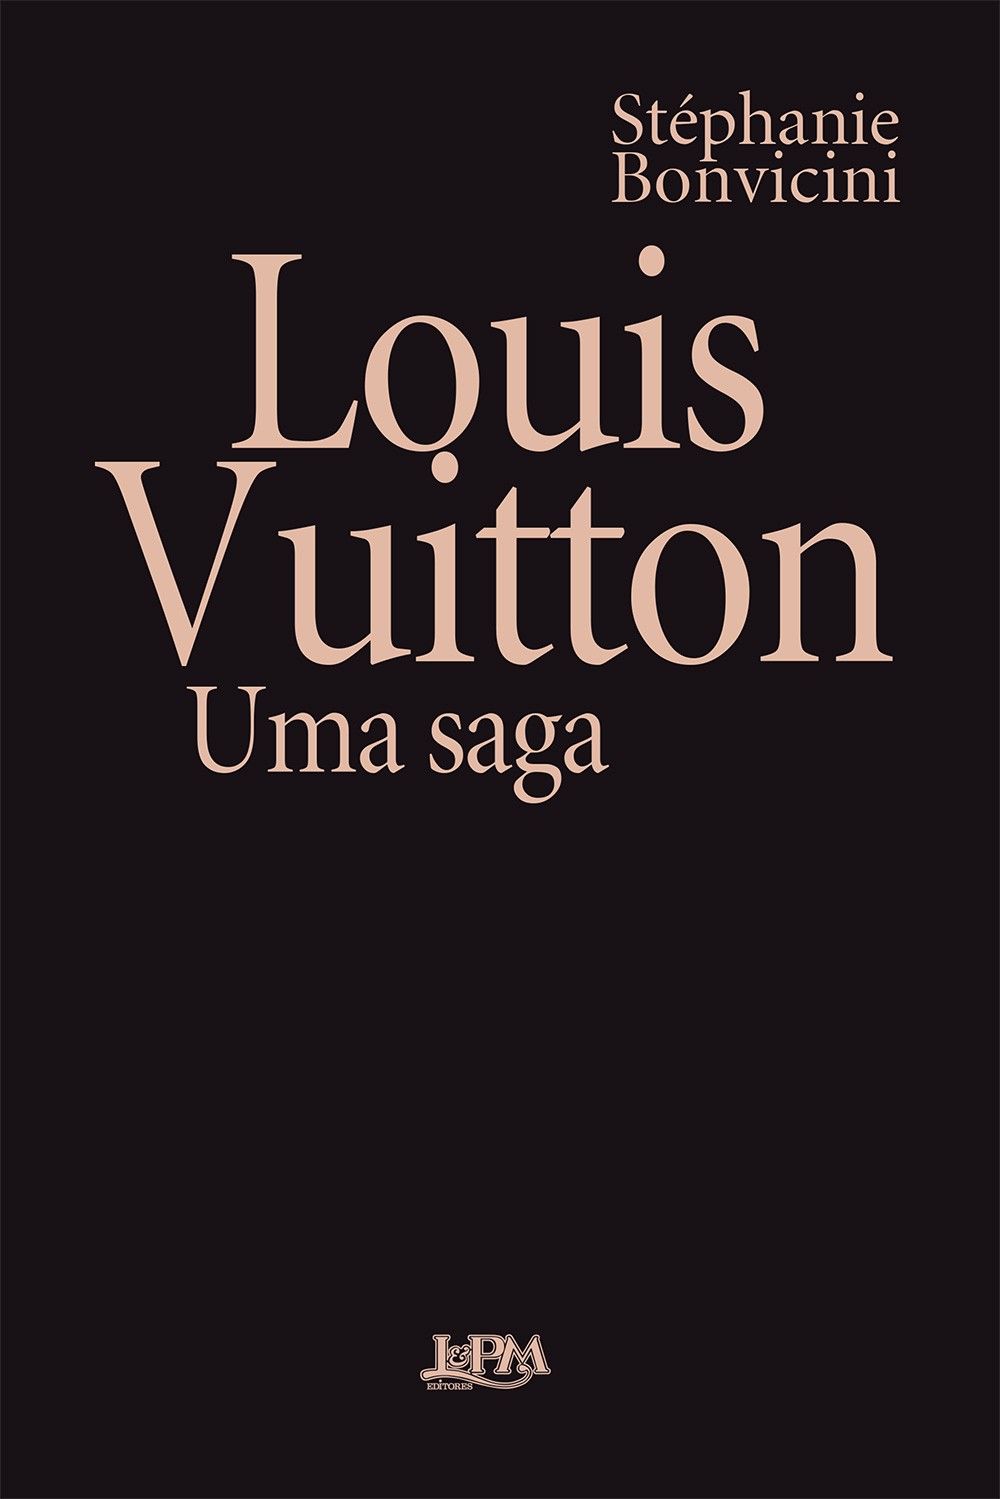 Louis Vuitton: uma saga